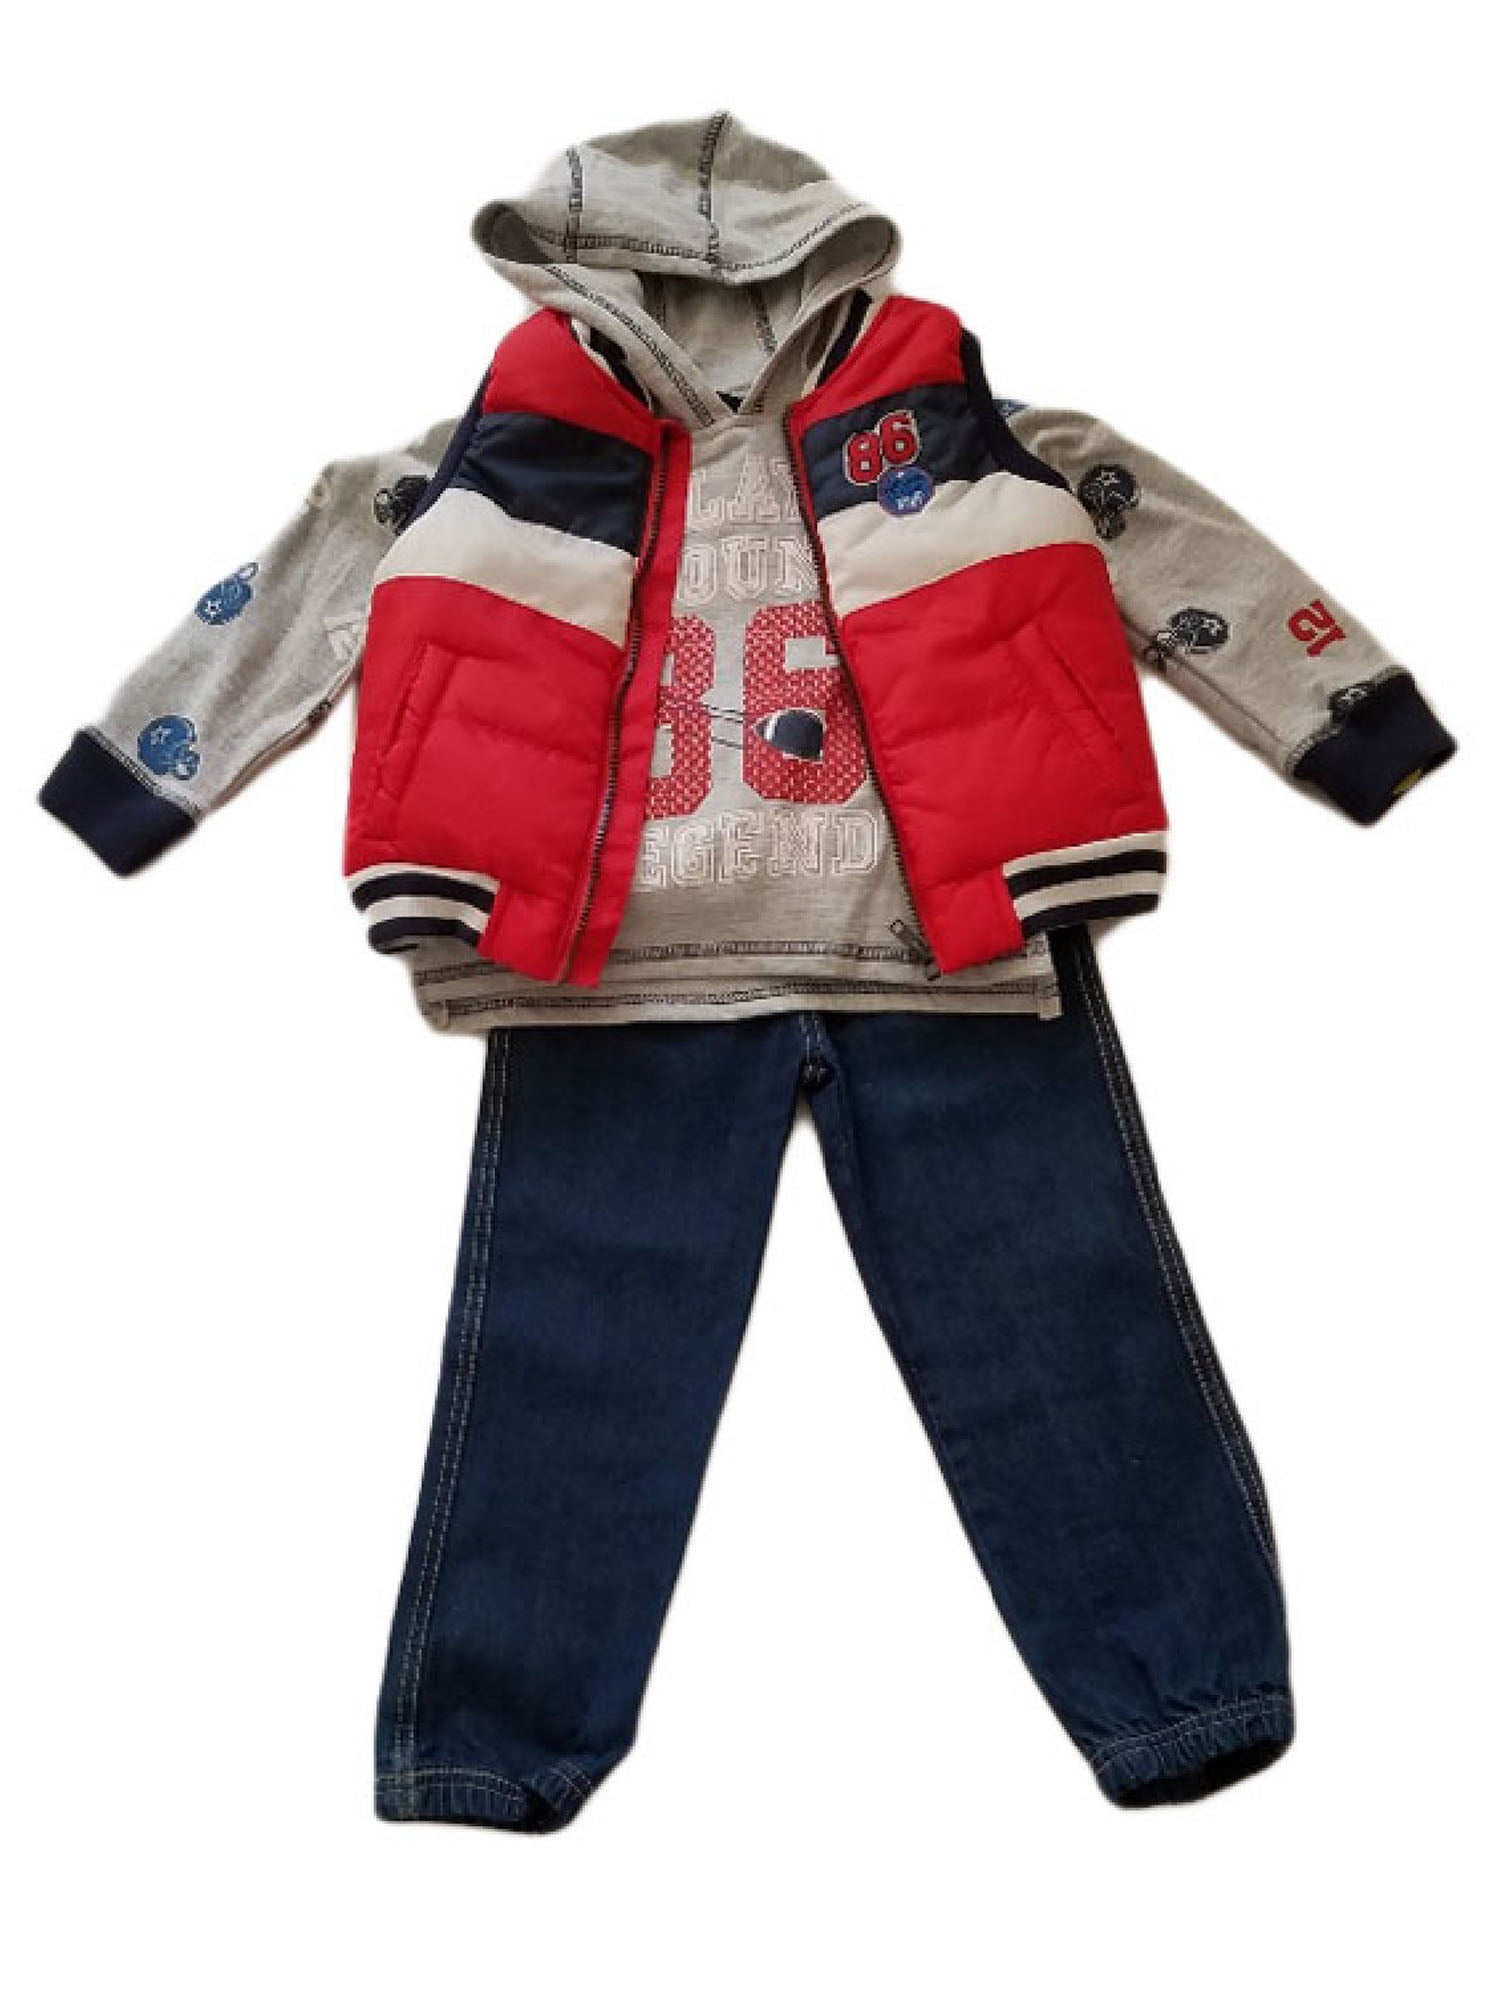 Disney Store Miles From Tomorrowland Boy Hooded Puffy Jacket Coat Size 5/6 